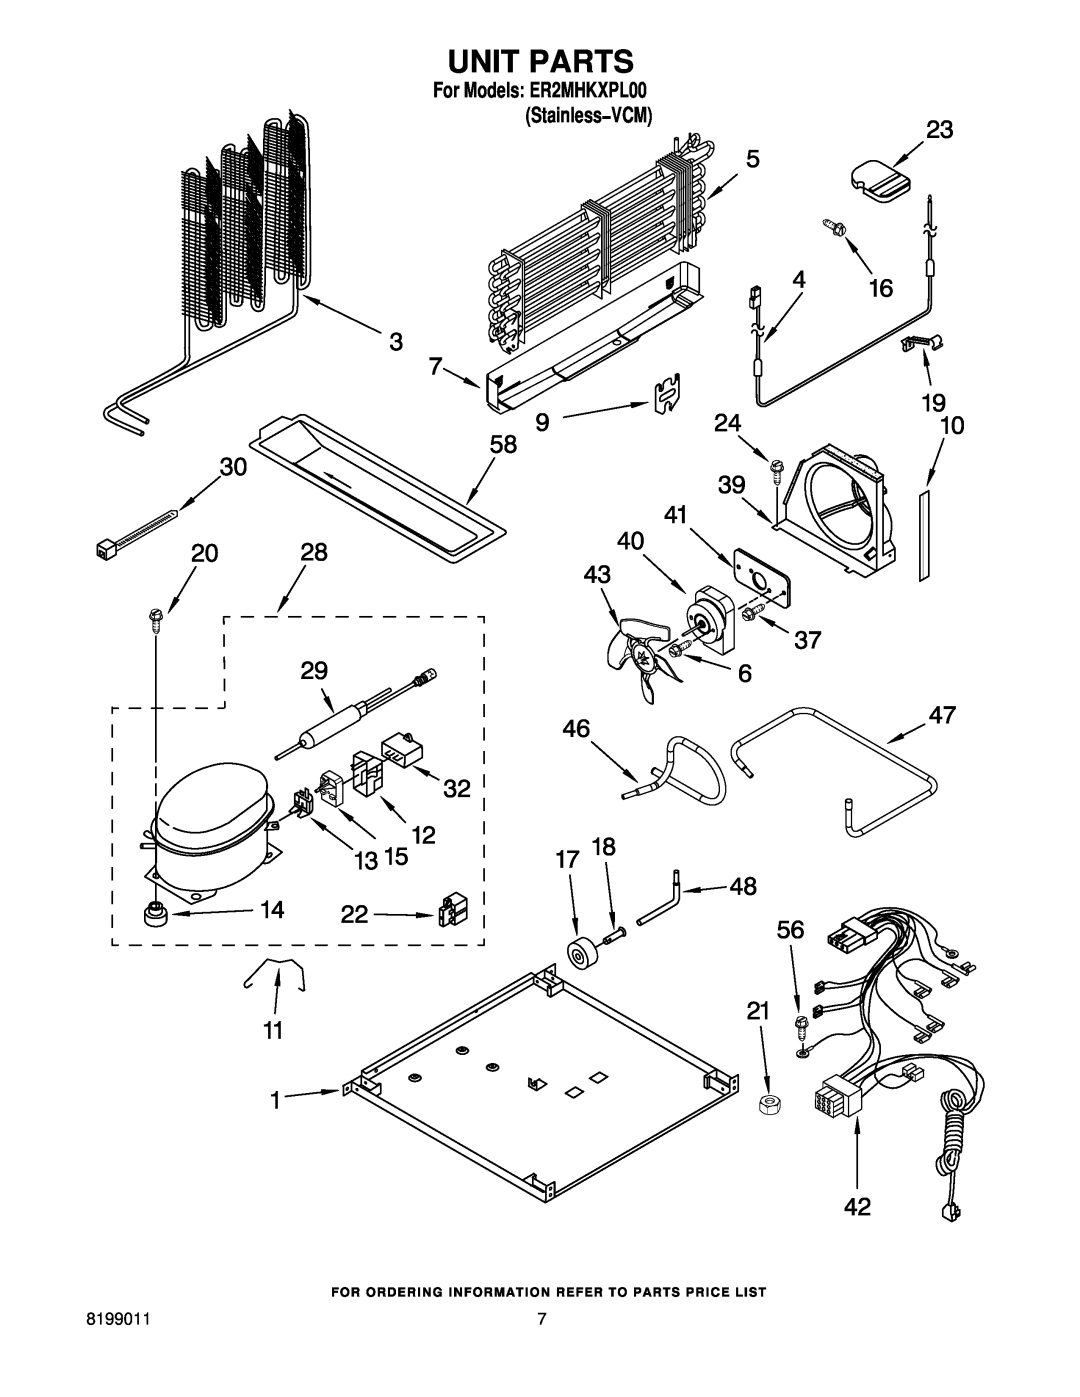 Whirlpool manual Unit Parts, For Models ER2MHKXPL00 Stainless−VCM 